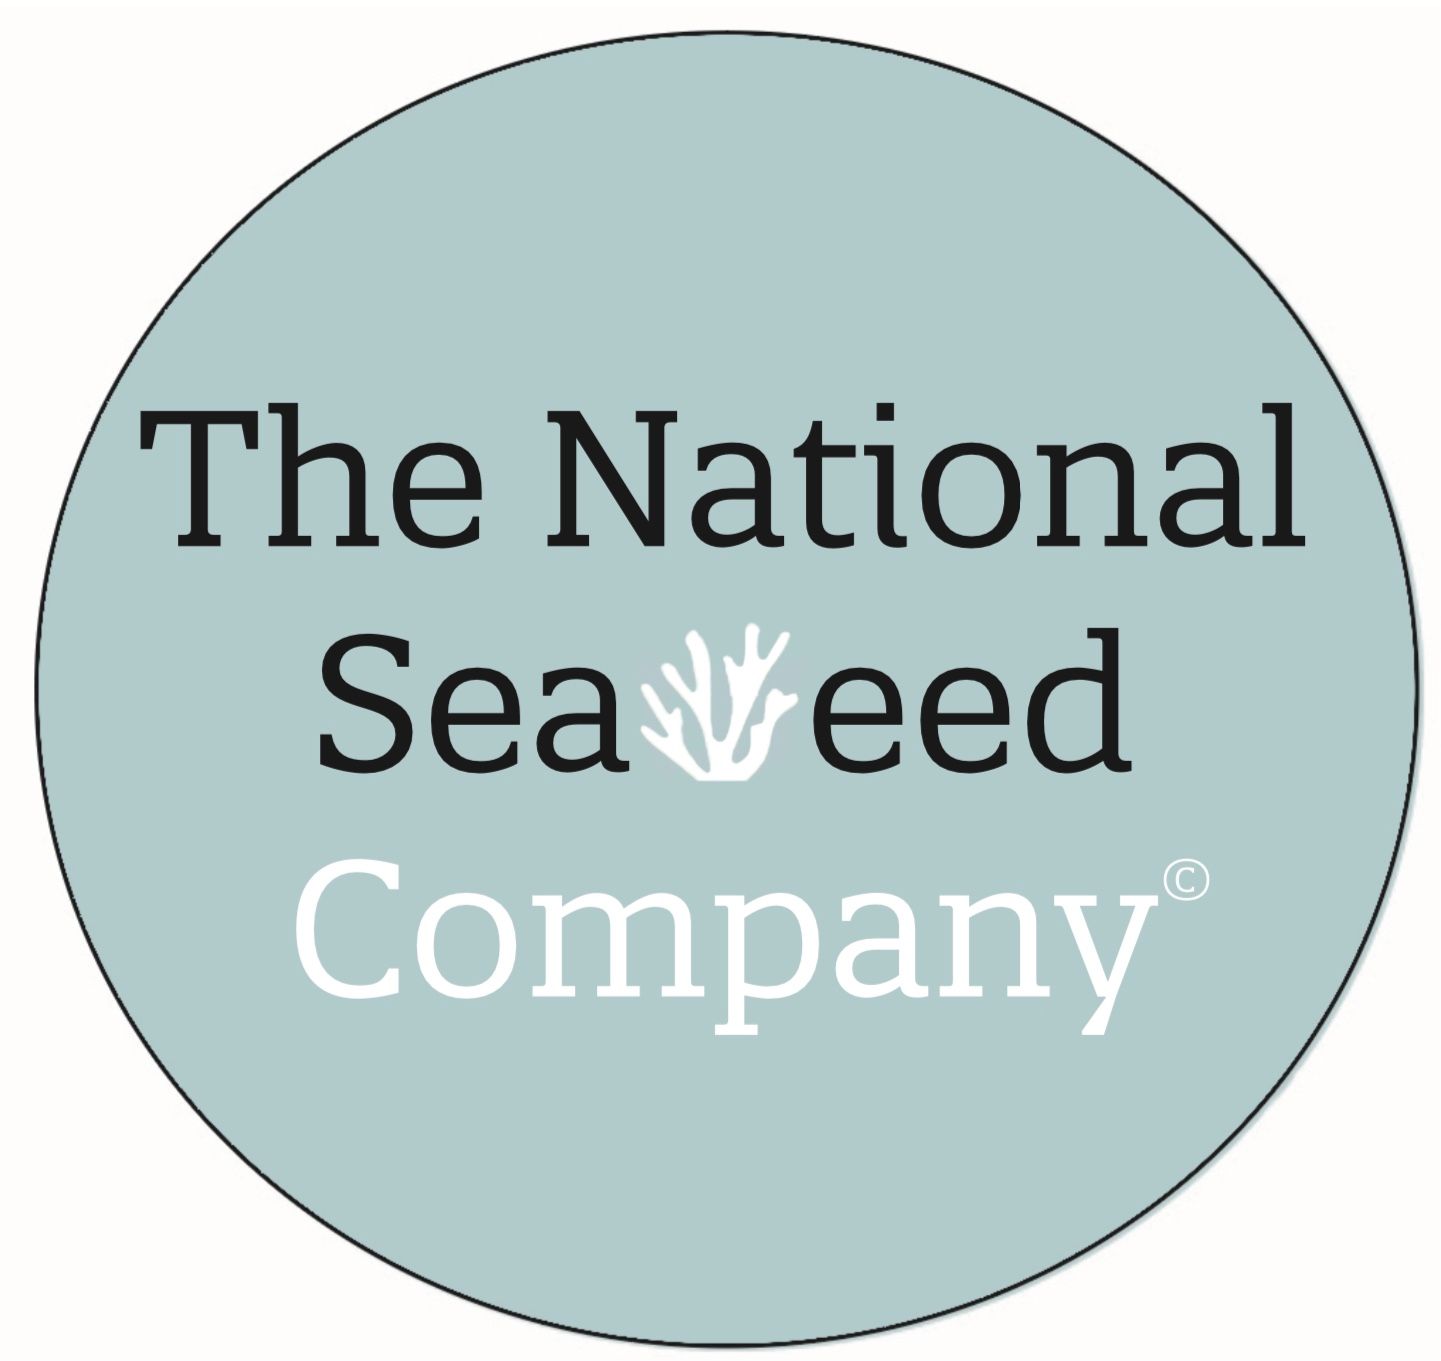 The Devon Seaweed Company